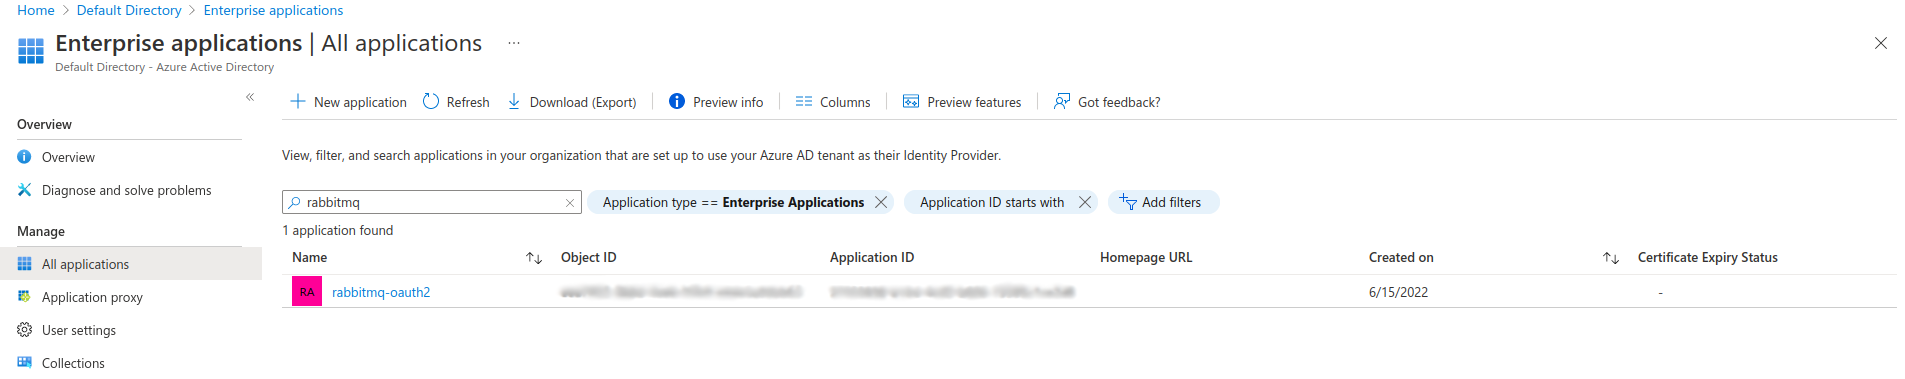 Azure AD Enterprise Applications